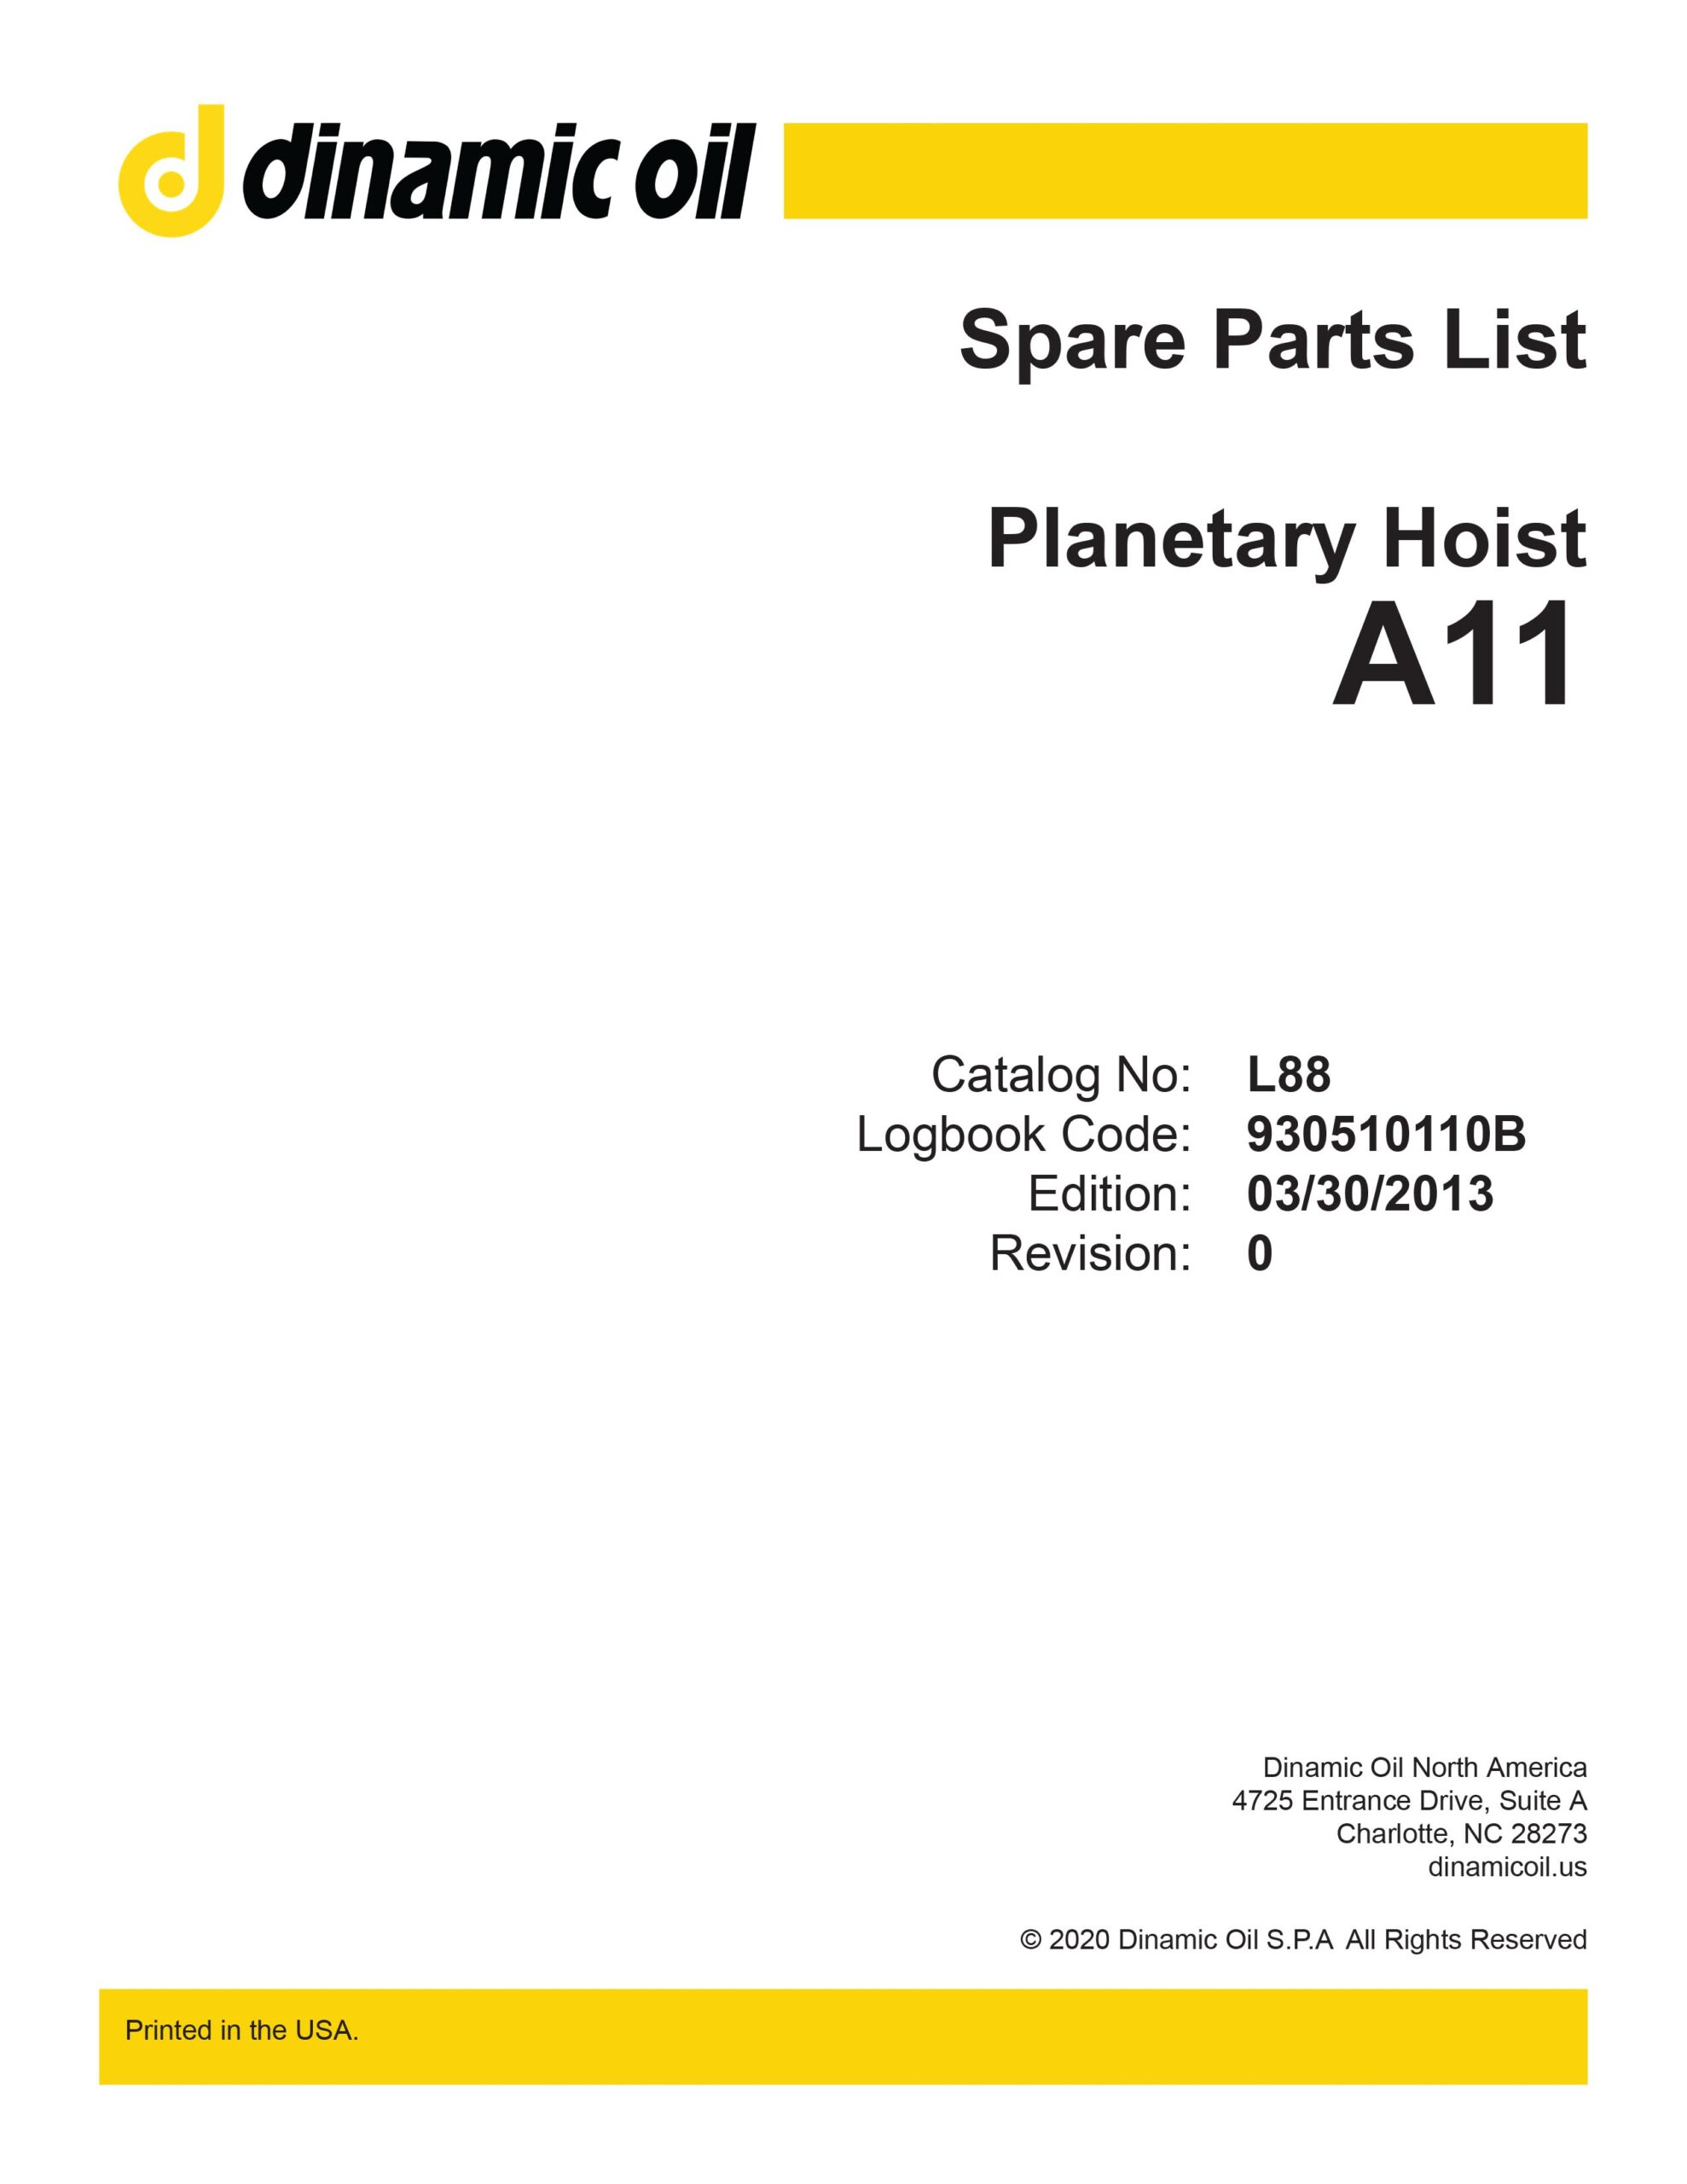 Planetary Hoist A11